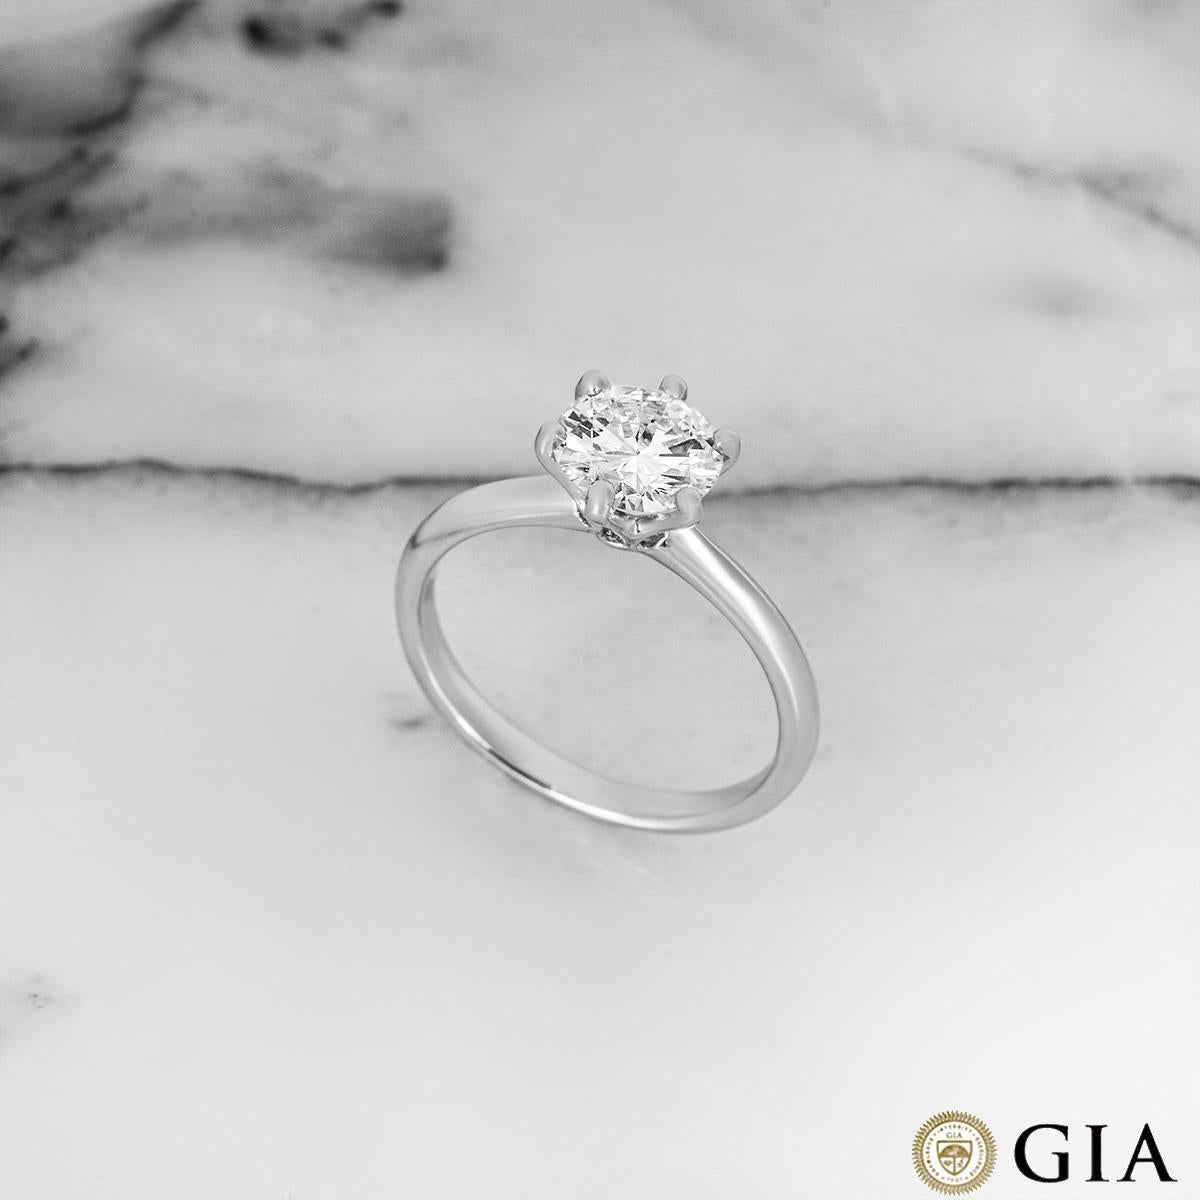 GIA Certified White Gold Round Brilliant Cut Diamond Ring 1.34ct I/VS1 For Sale 1